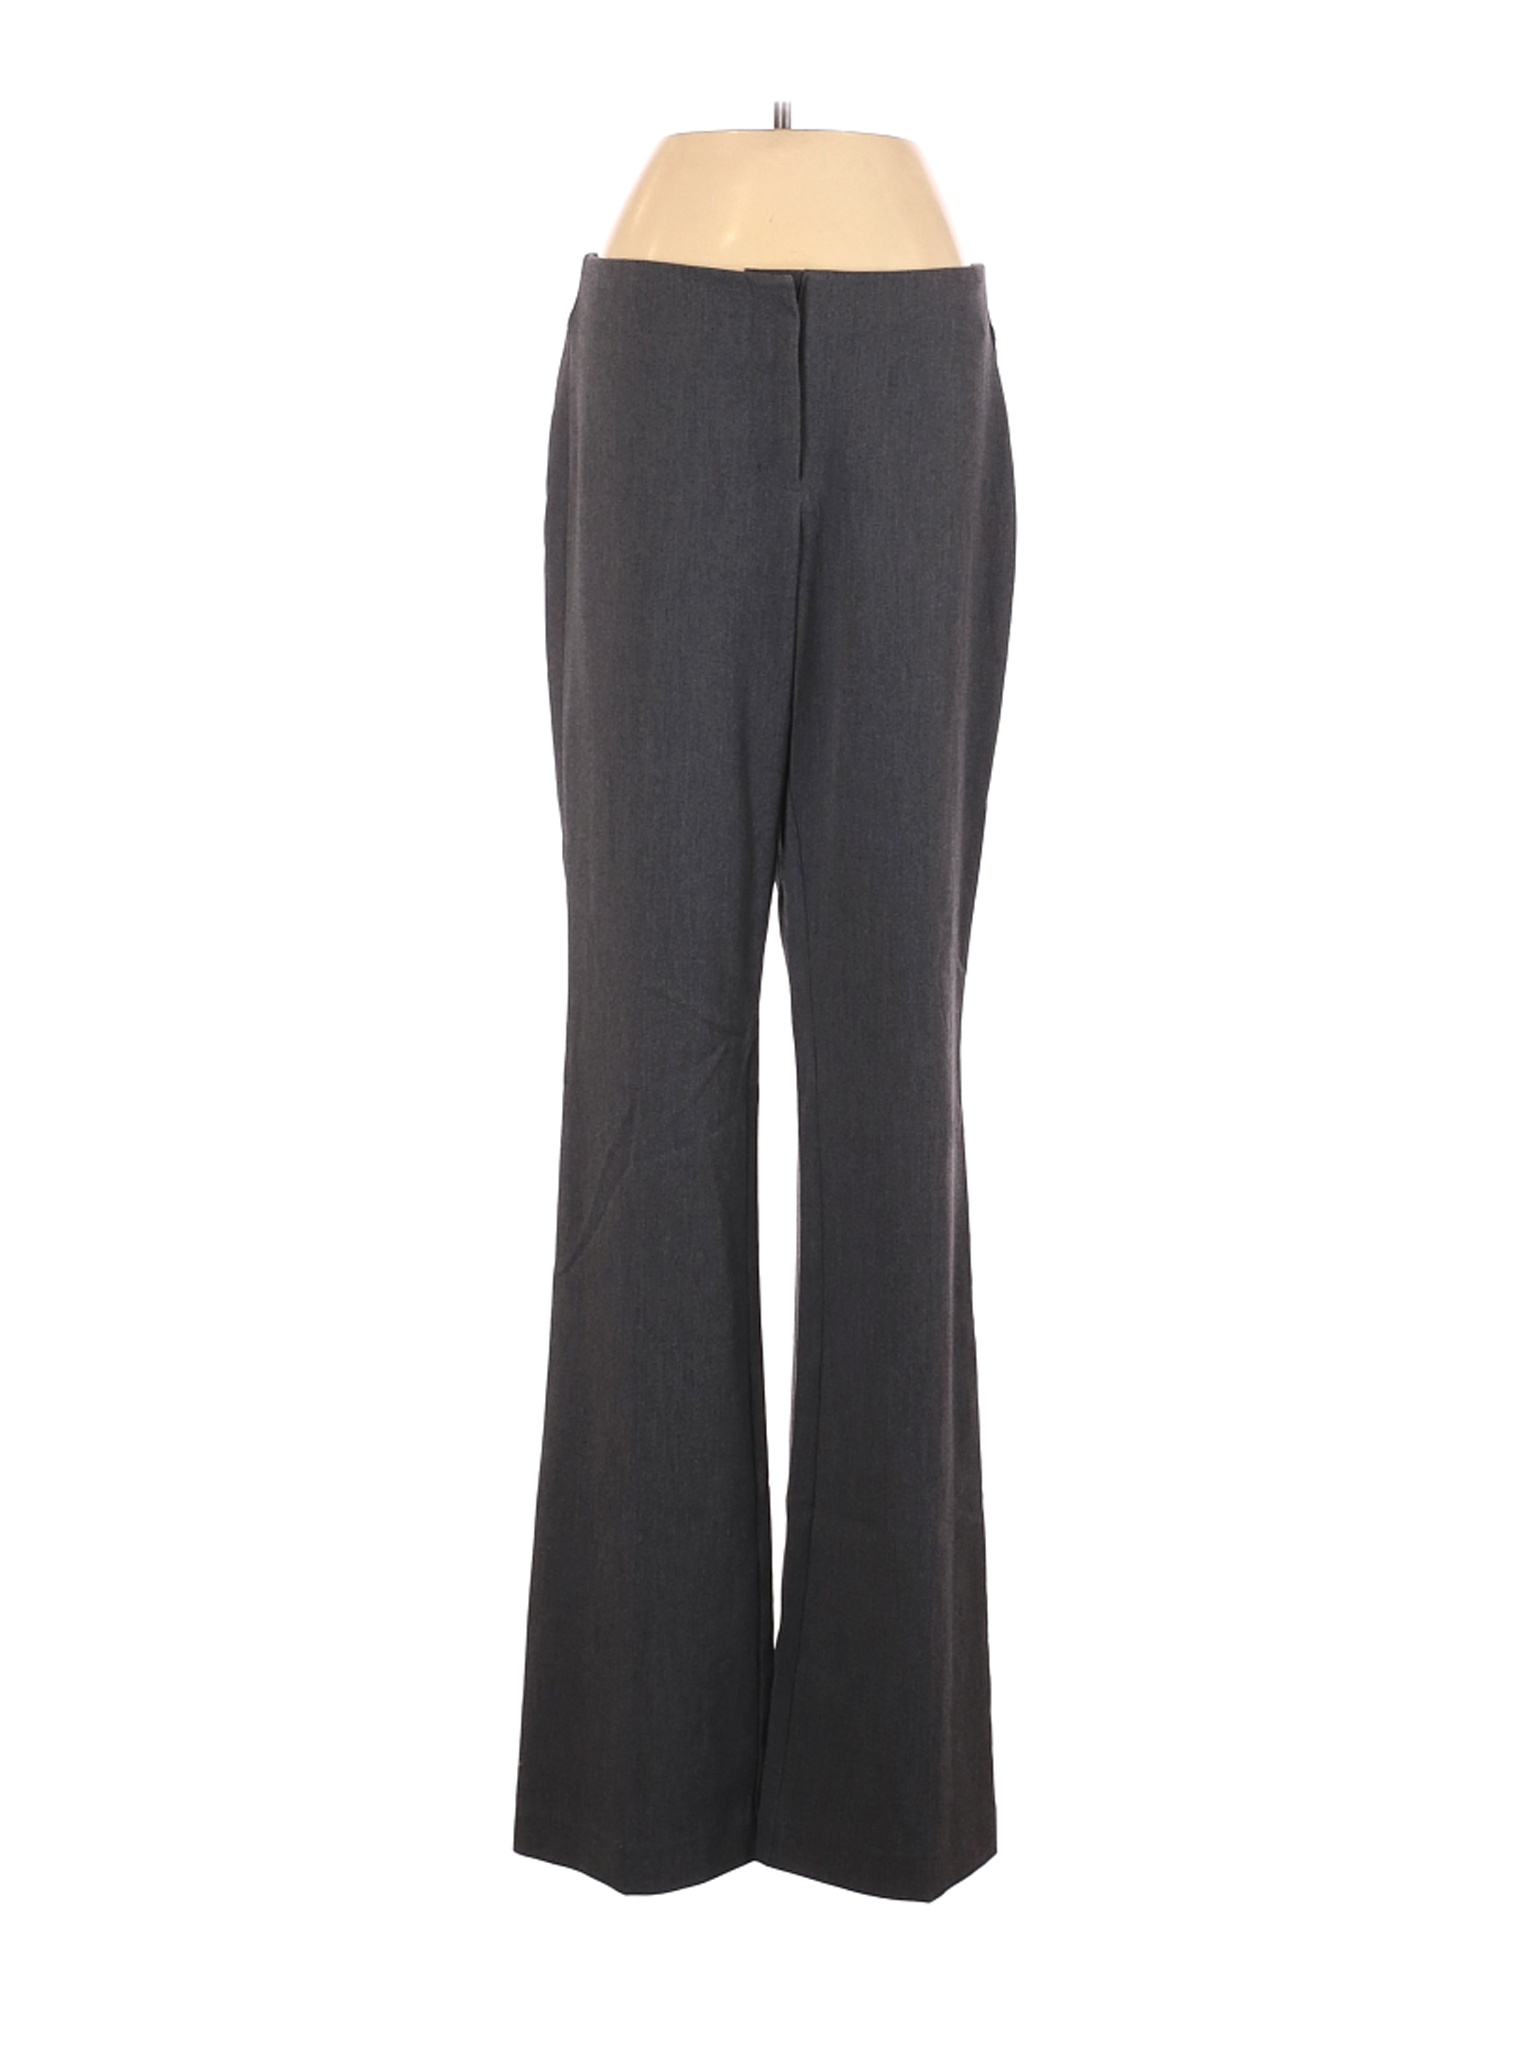 The Limited Women Gray Dress Pants 2 | eBay